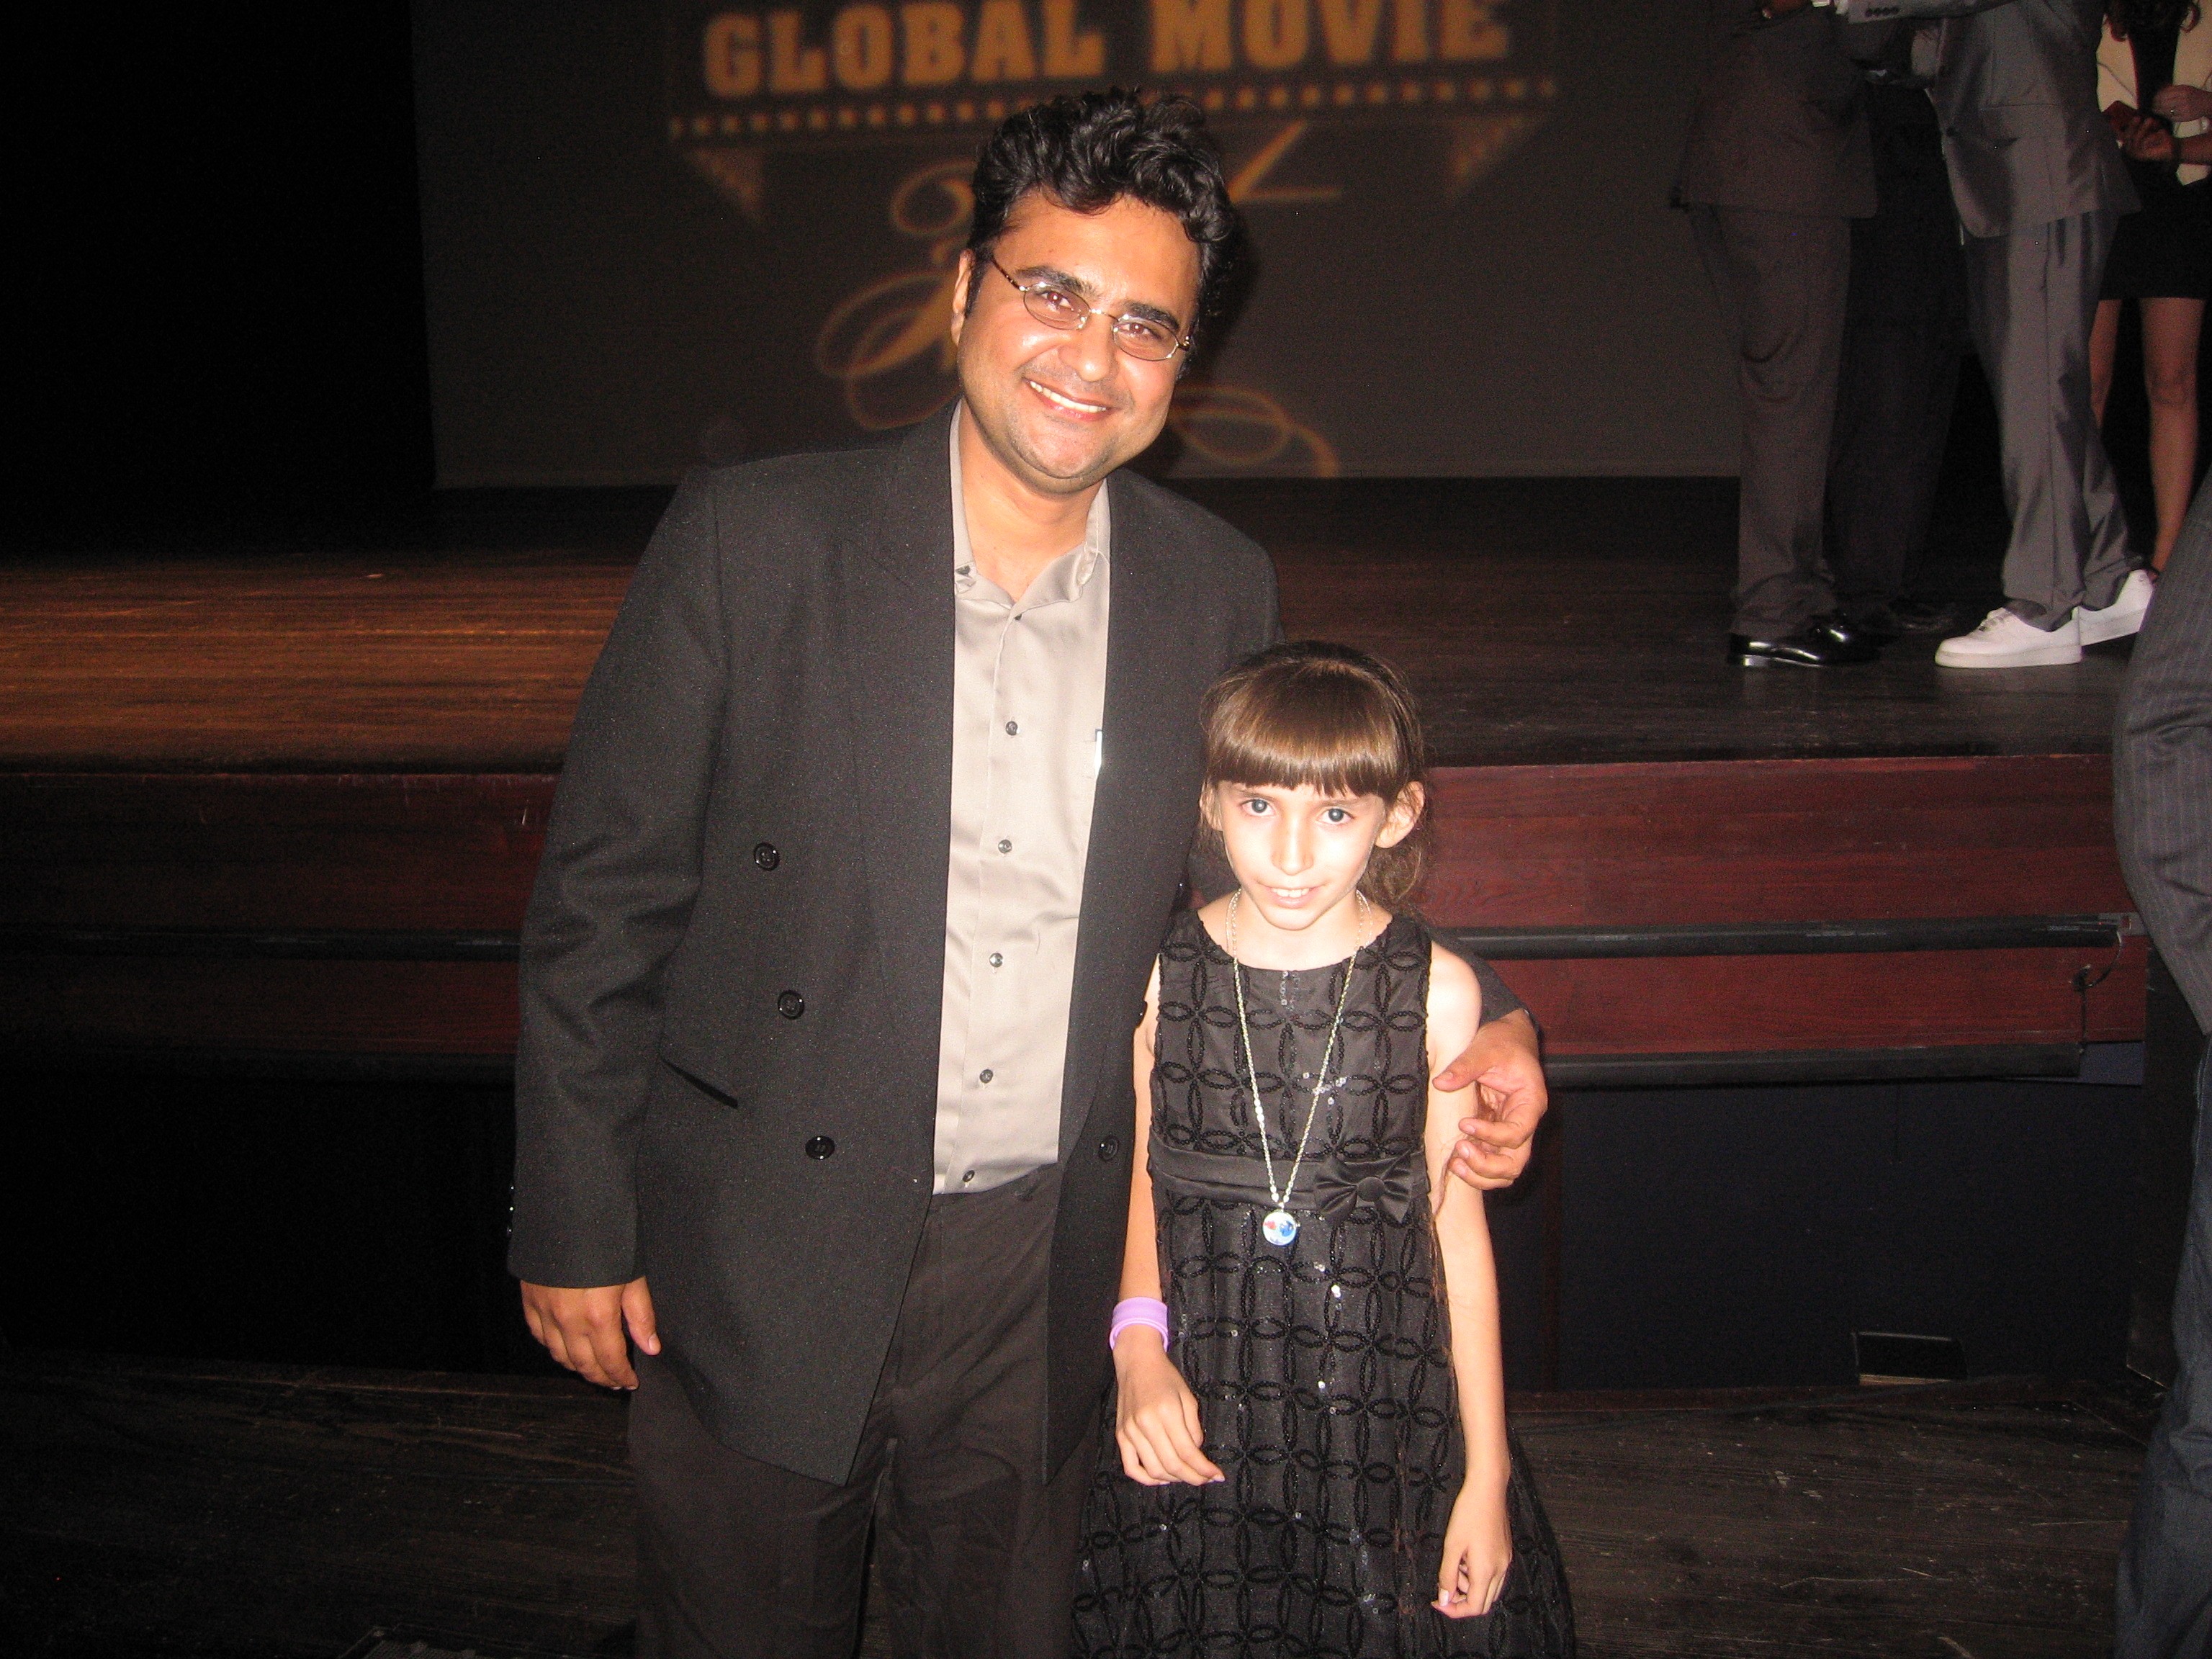 Natalie Miranda & Director Param Gill at the premiere of 